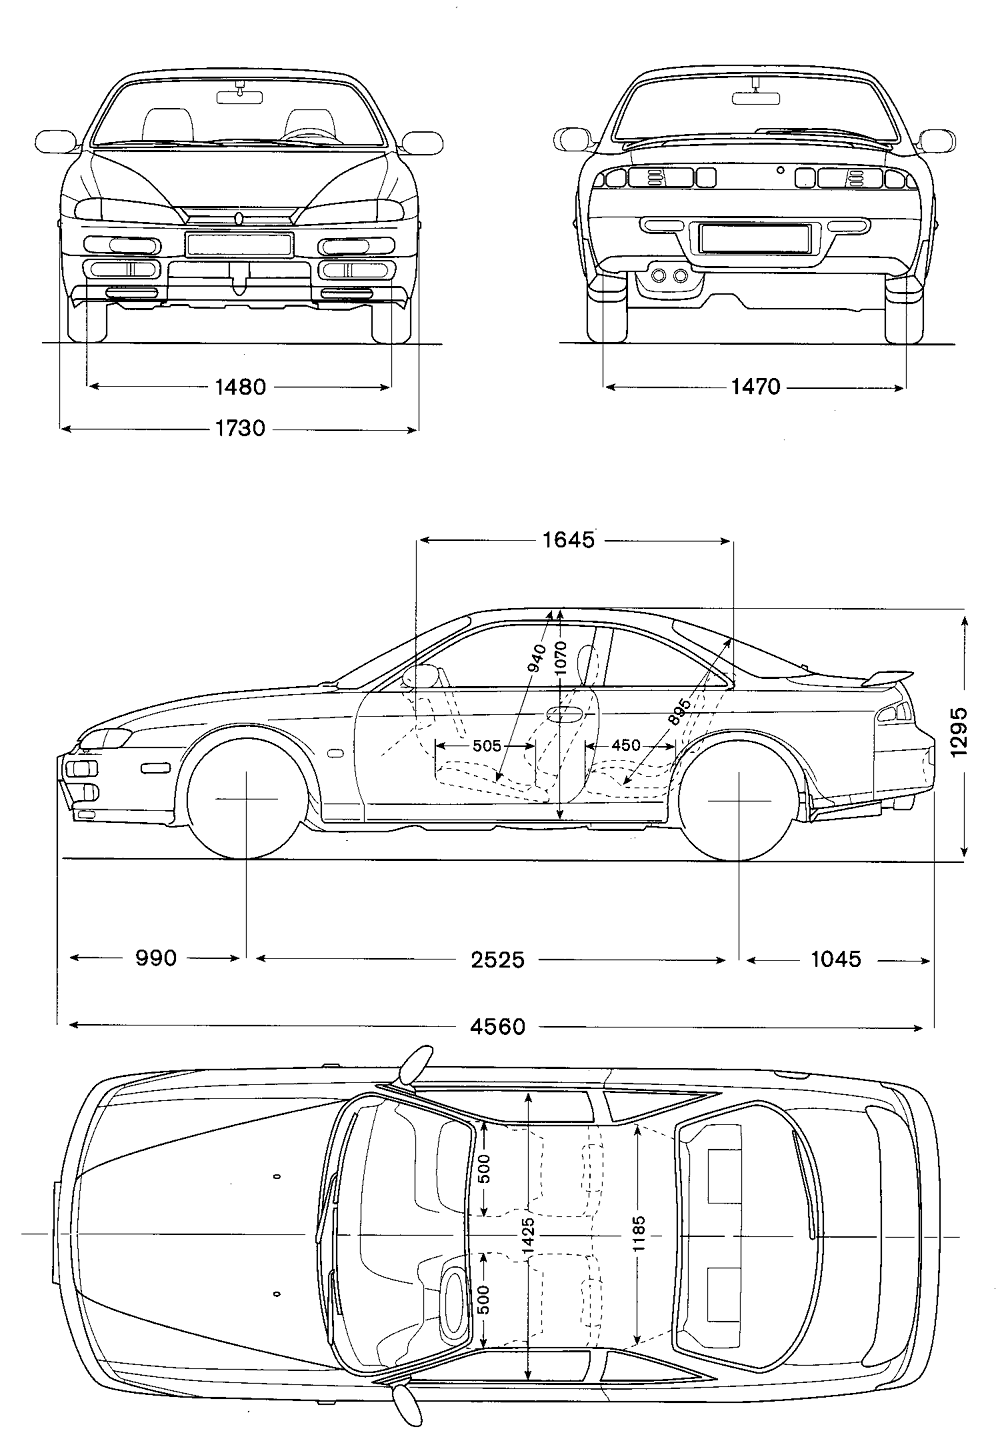 Nissan 200SX blueprint